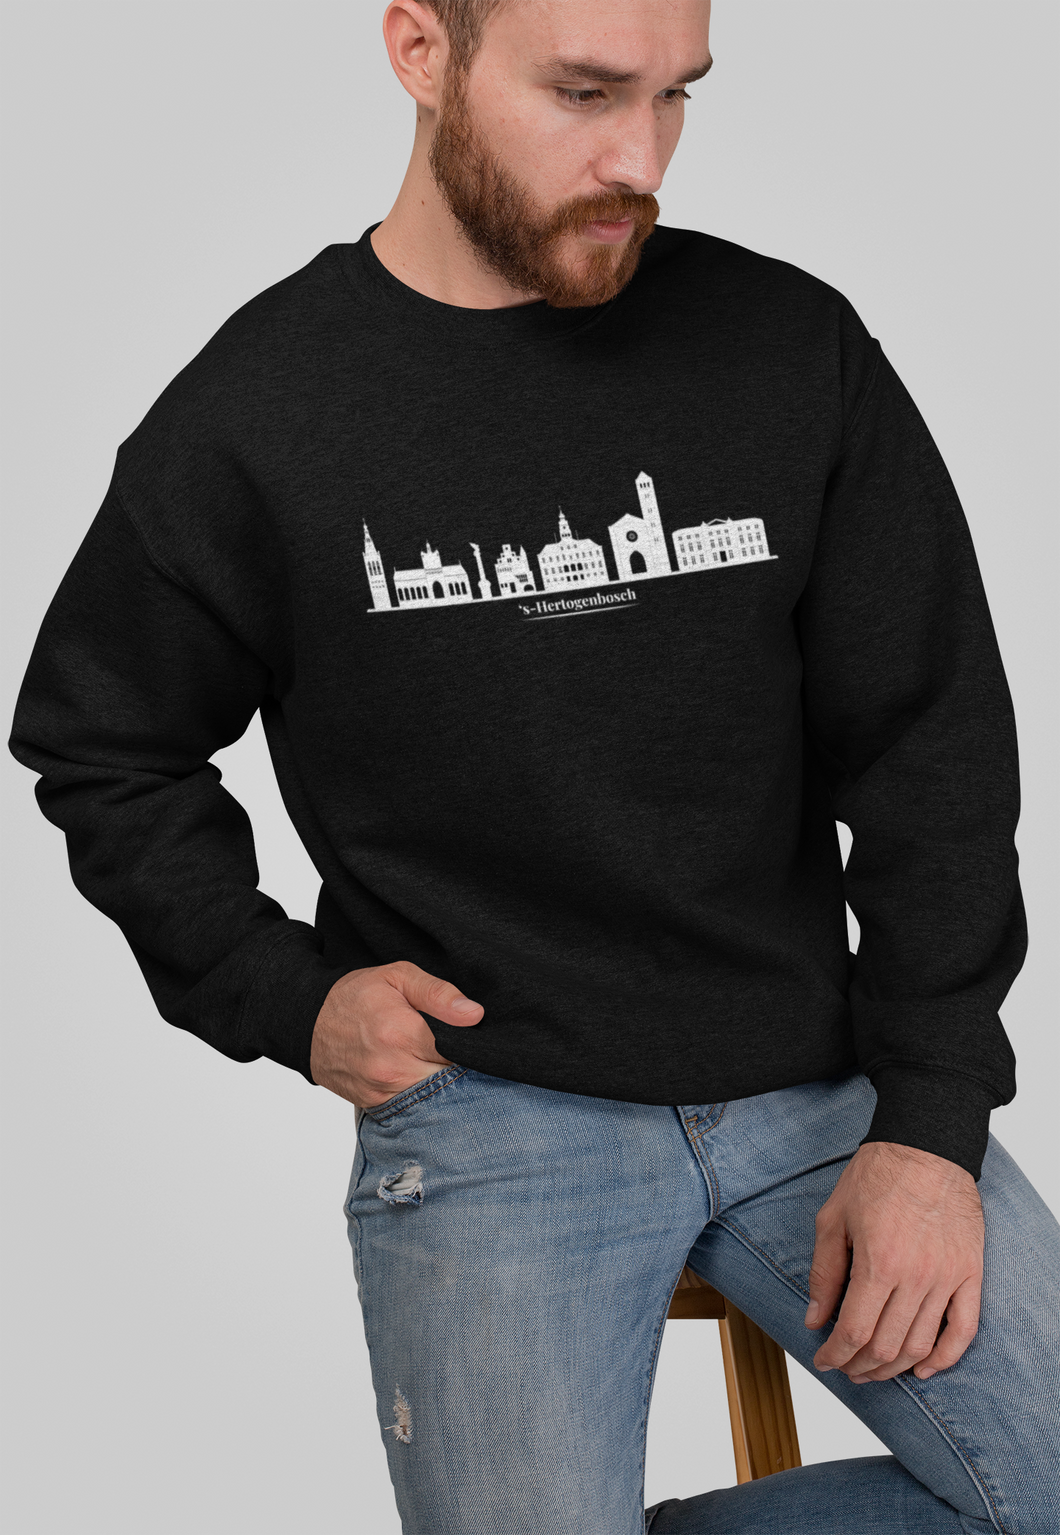 's-Hertogenbosch Skyline Sweater